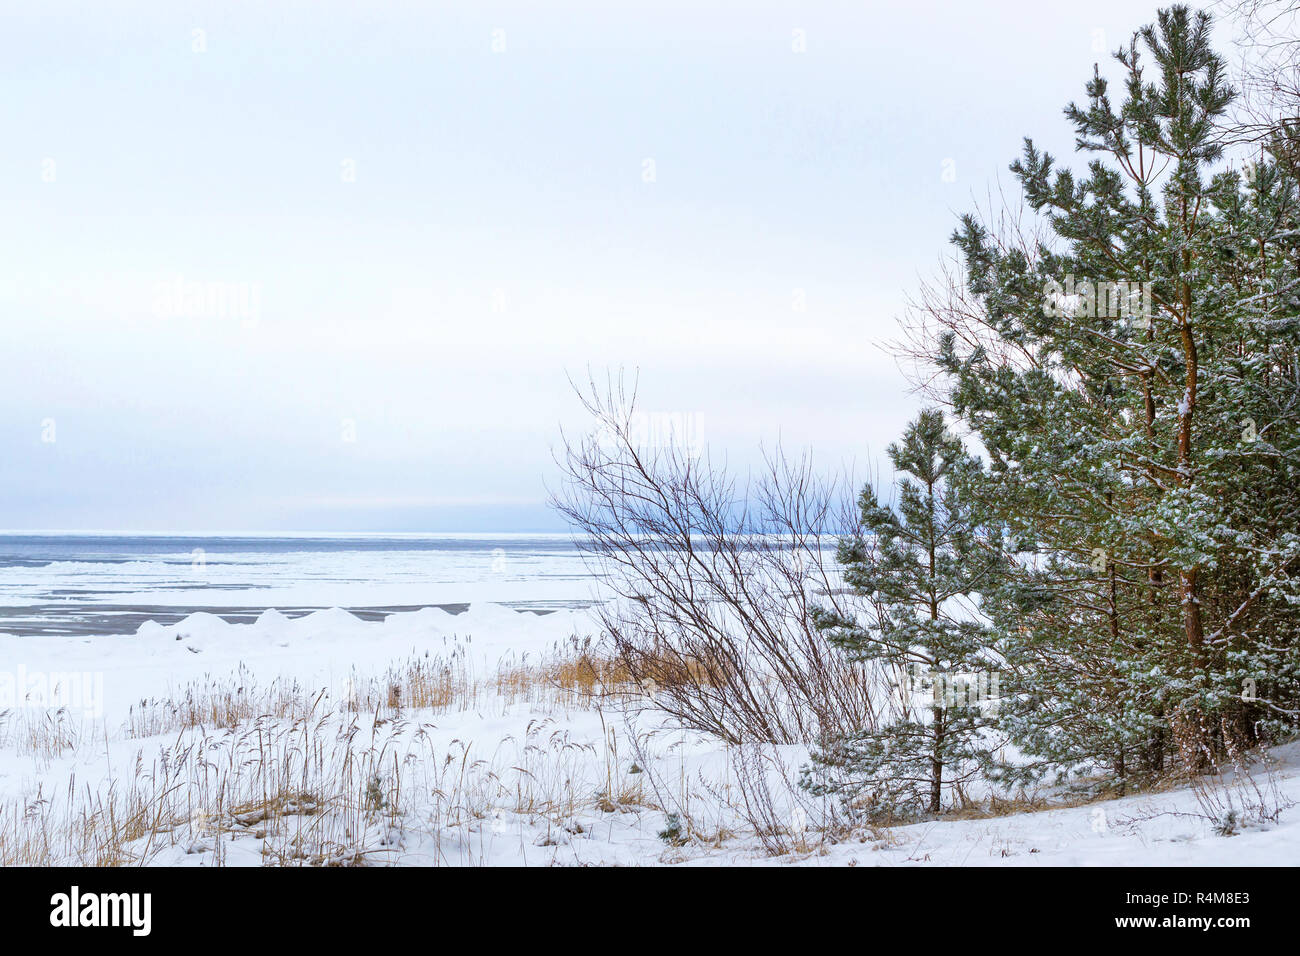 Winter day on snowy shore of Narva Bay. Snow on ice of frozen Finnish gulf. Narva-Joesuu resort town in Estonia Ida-Virumaa. Severe Northern winter and snowy weather. Pine forest, pinewood Stock Photo